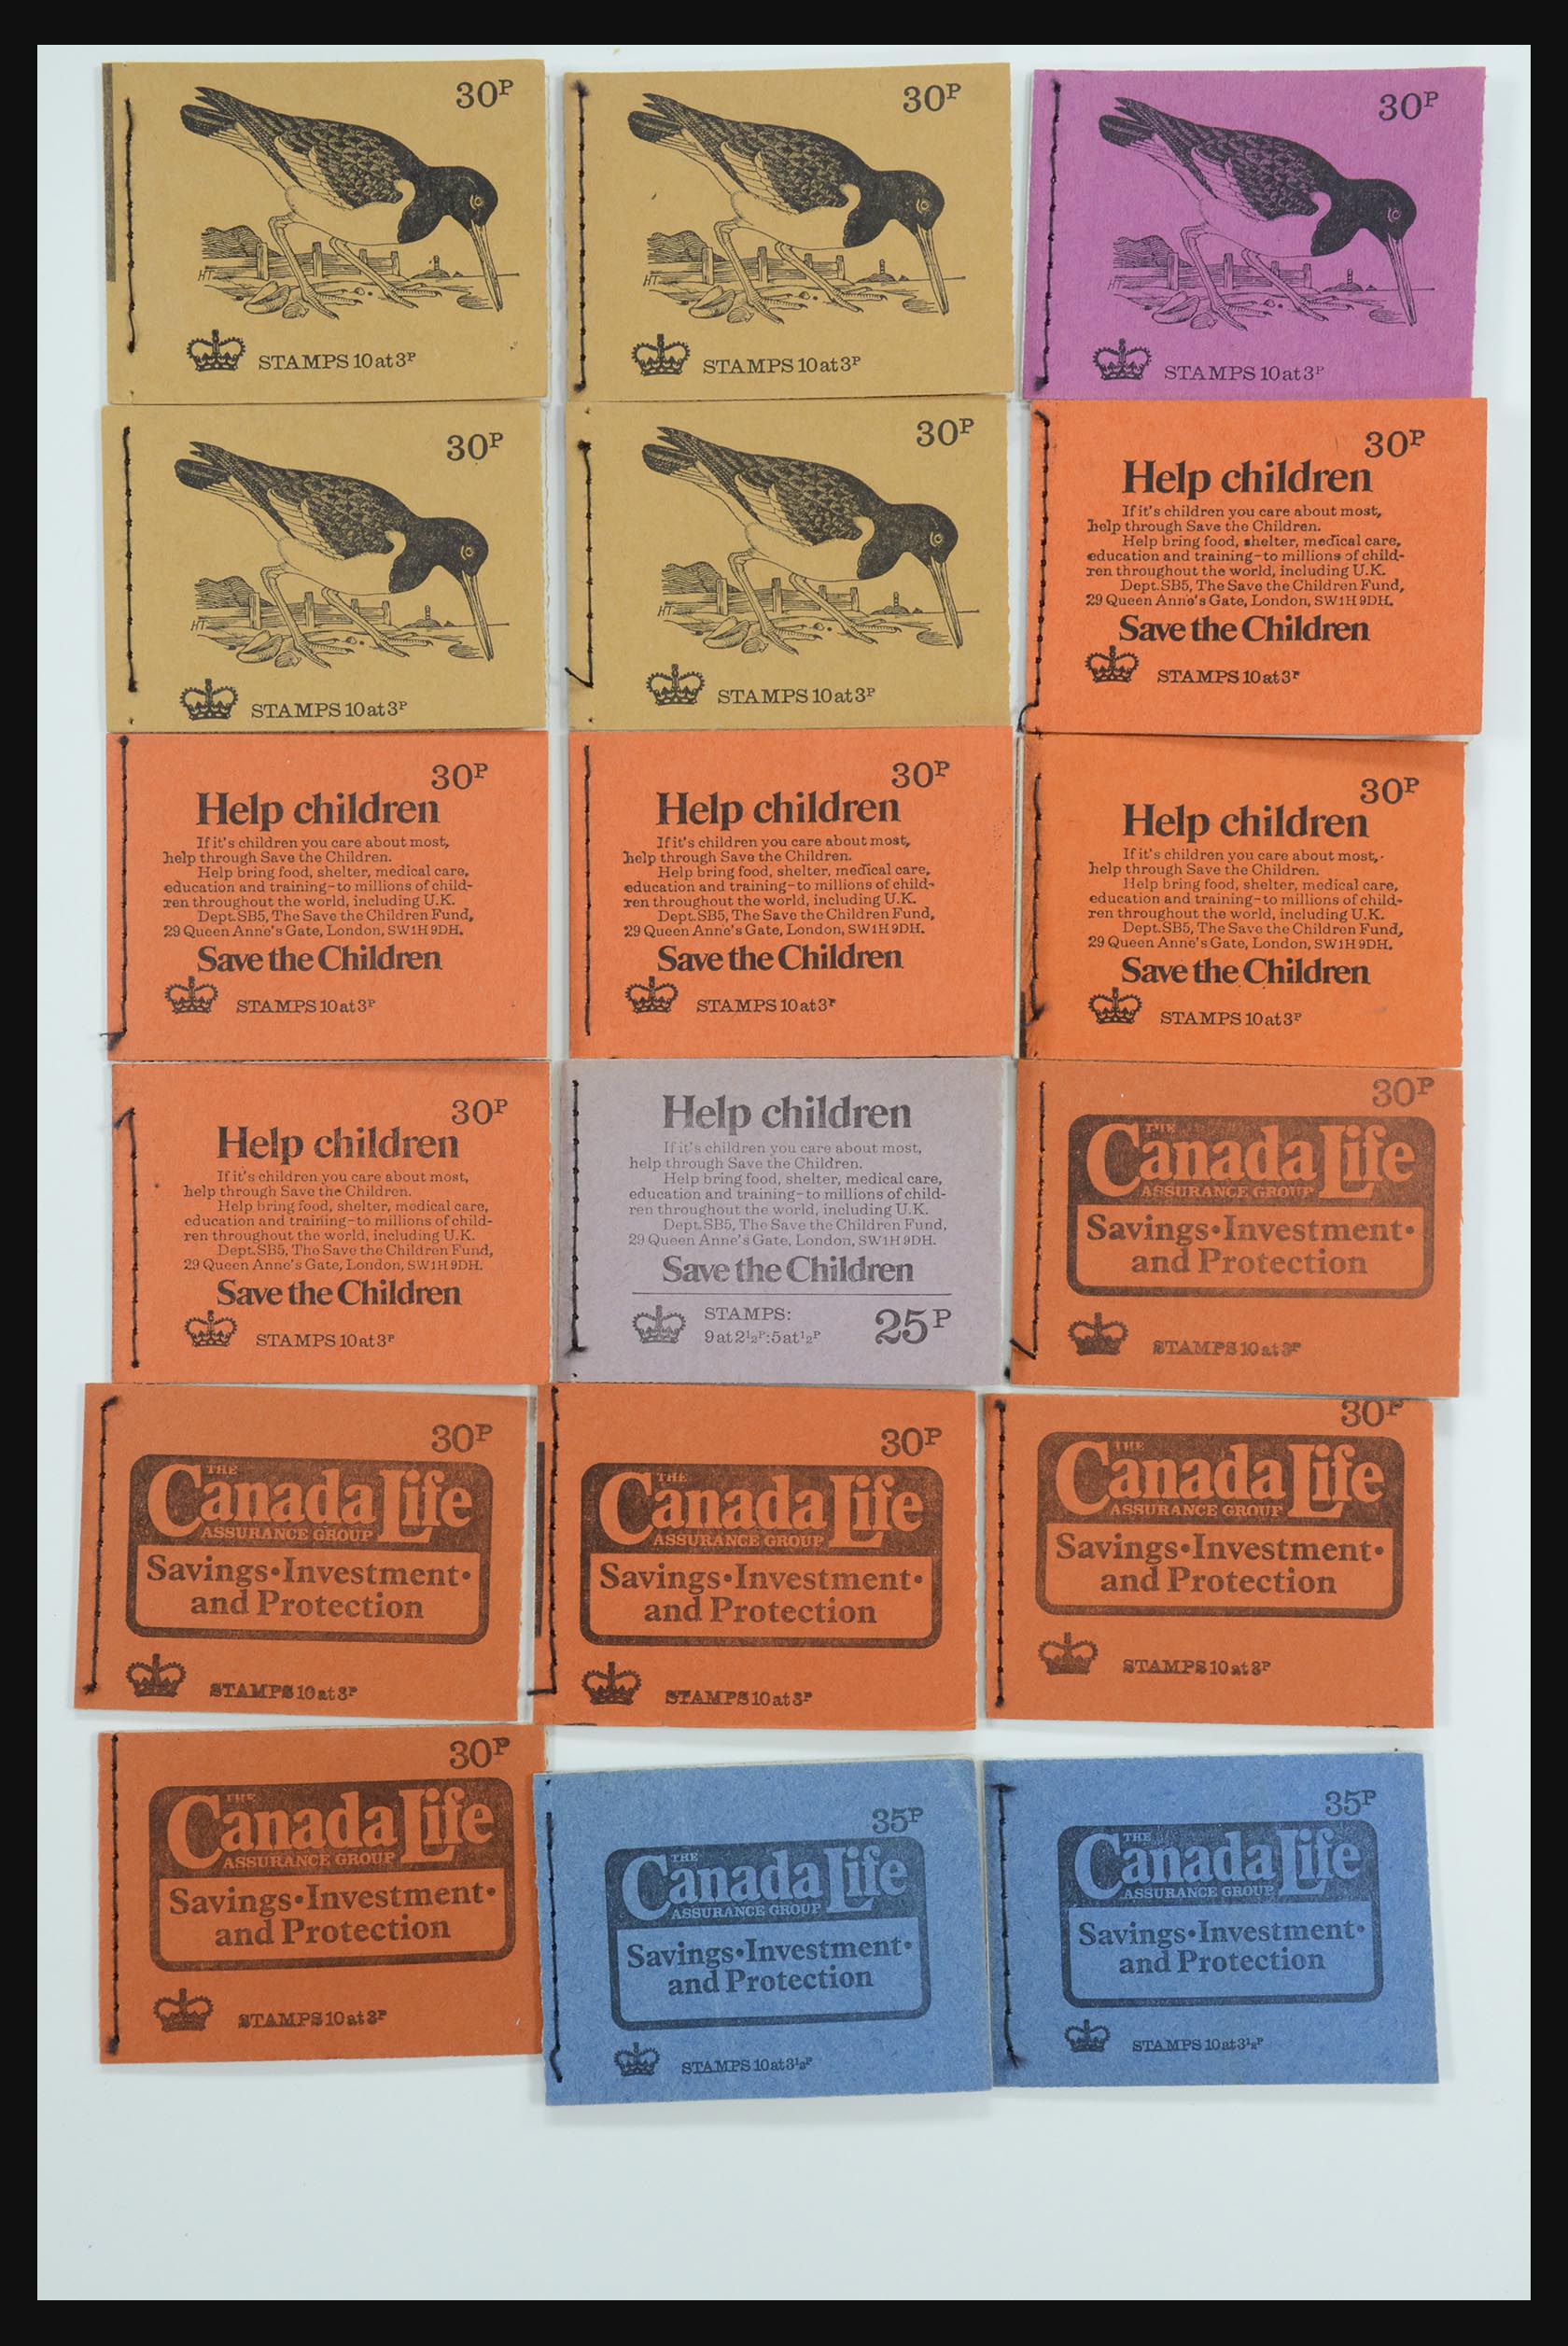 31961 018 - 31961 Great Britain stampbooklets 1971-1999.